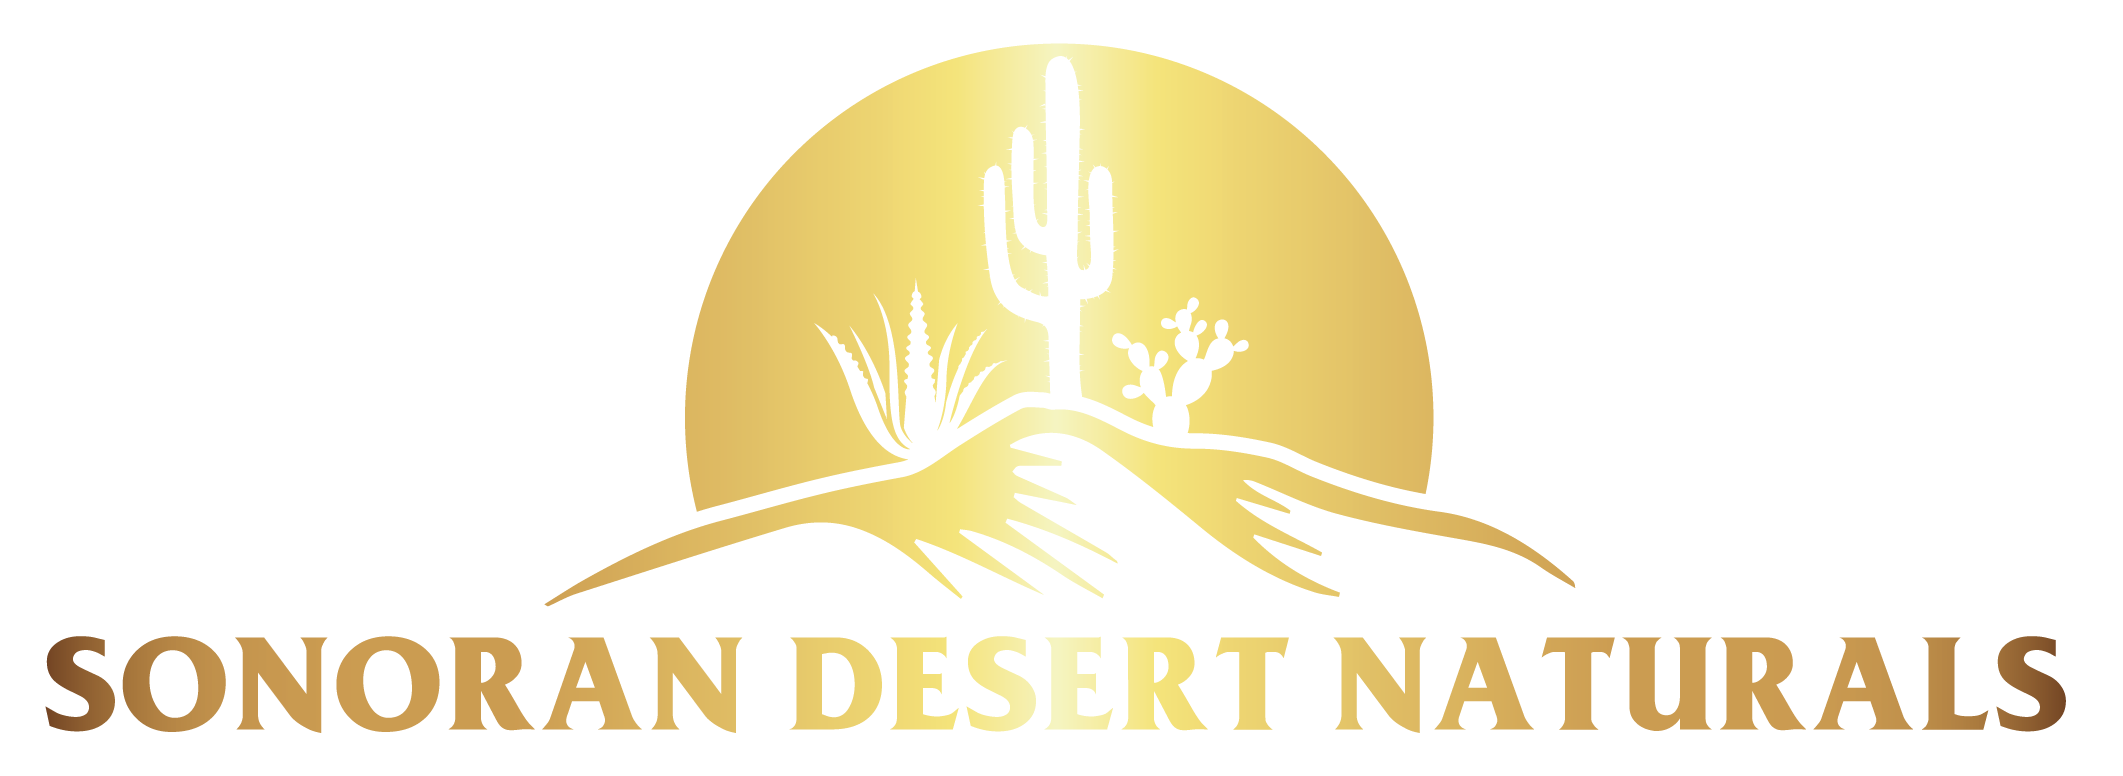 Sonoran Desert Naturals